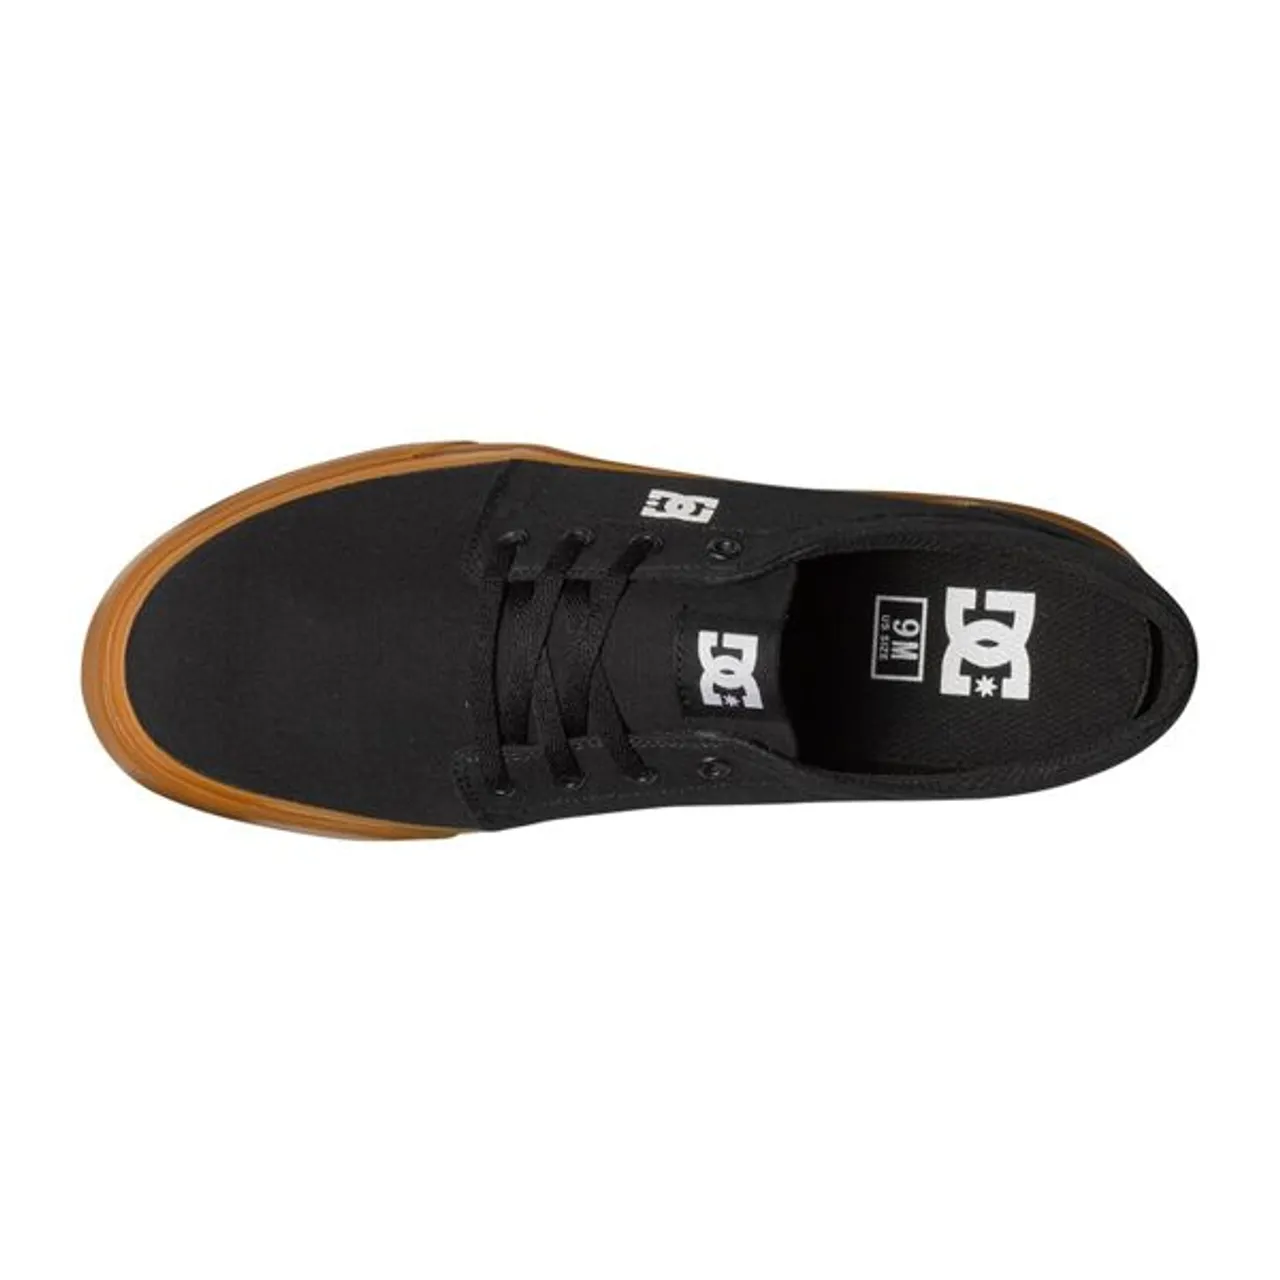 Sneaker DC SHOES "Trase TX" Gr. 10,5(44), schwarz (black, gum) Schuhe Sneaker